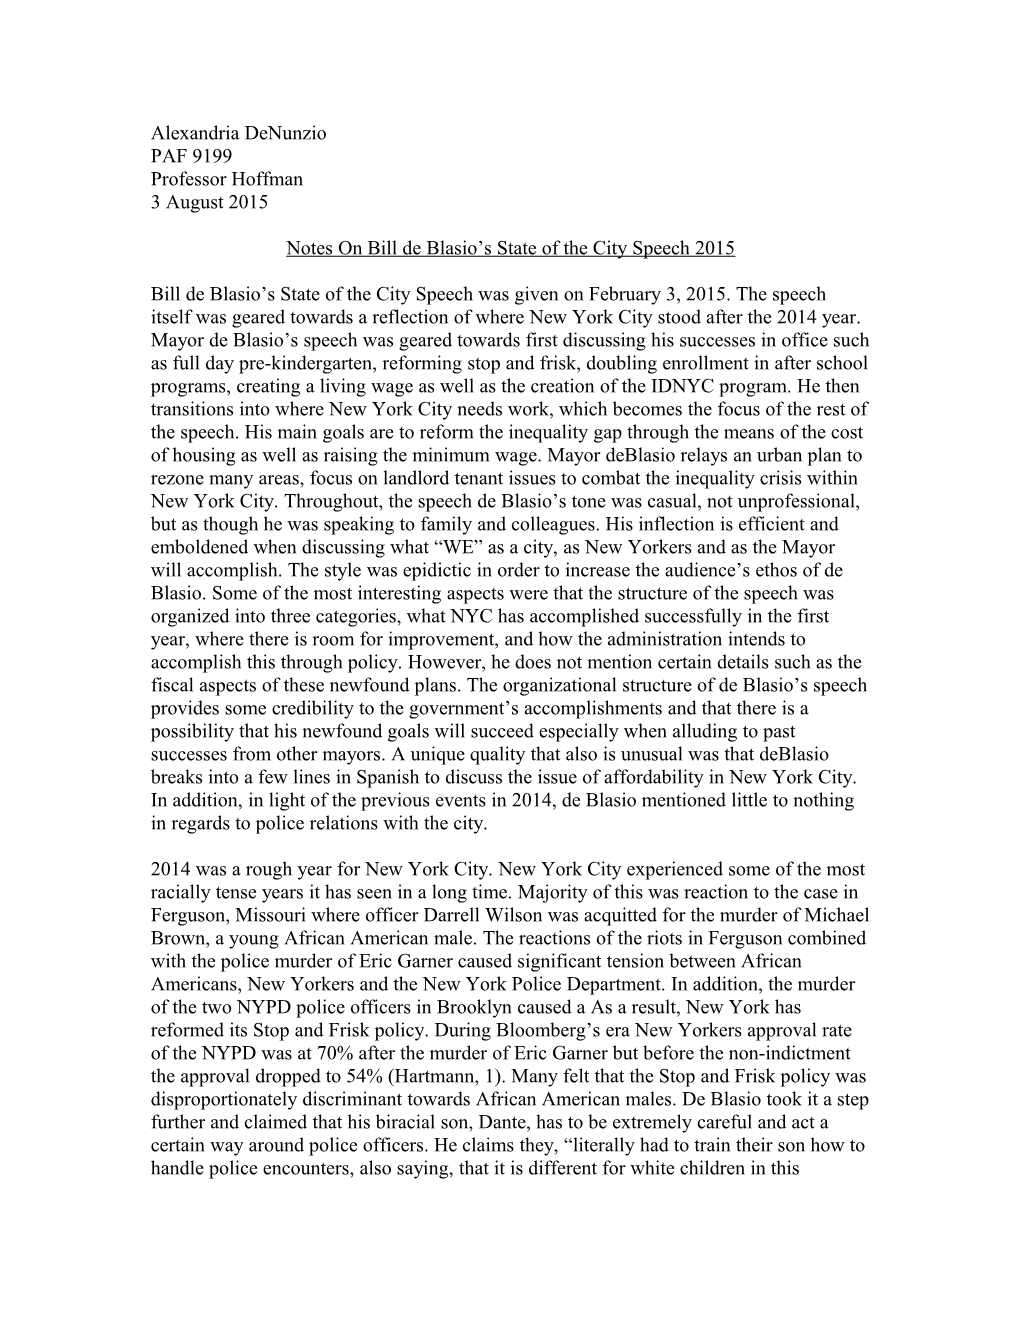 Notes on Bill De Blasio S State of the City Speech 2015